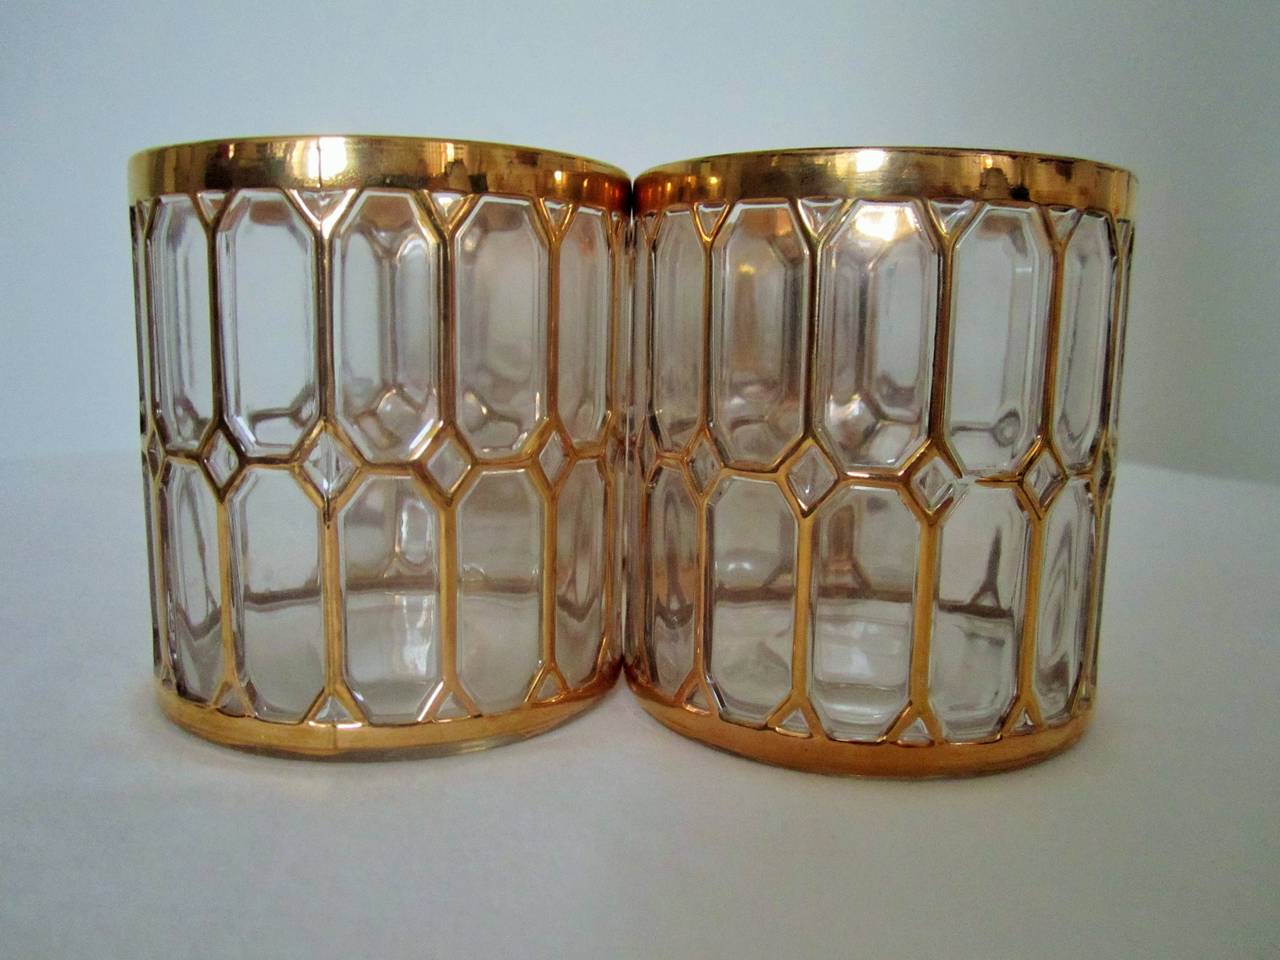 Hollywood Regency Vintage Barware Rocks Cocktail Glasses in 24-Karat Gold by Imperial Glass, 1970s